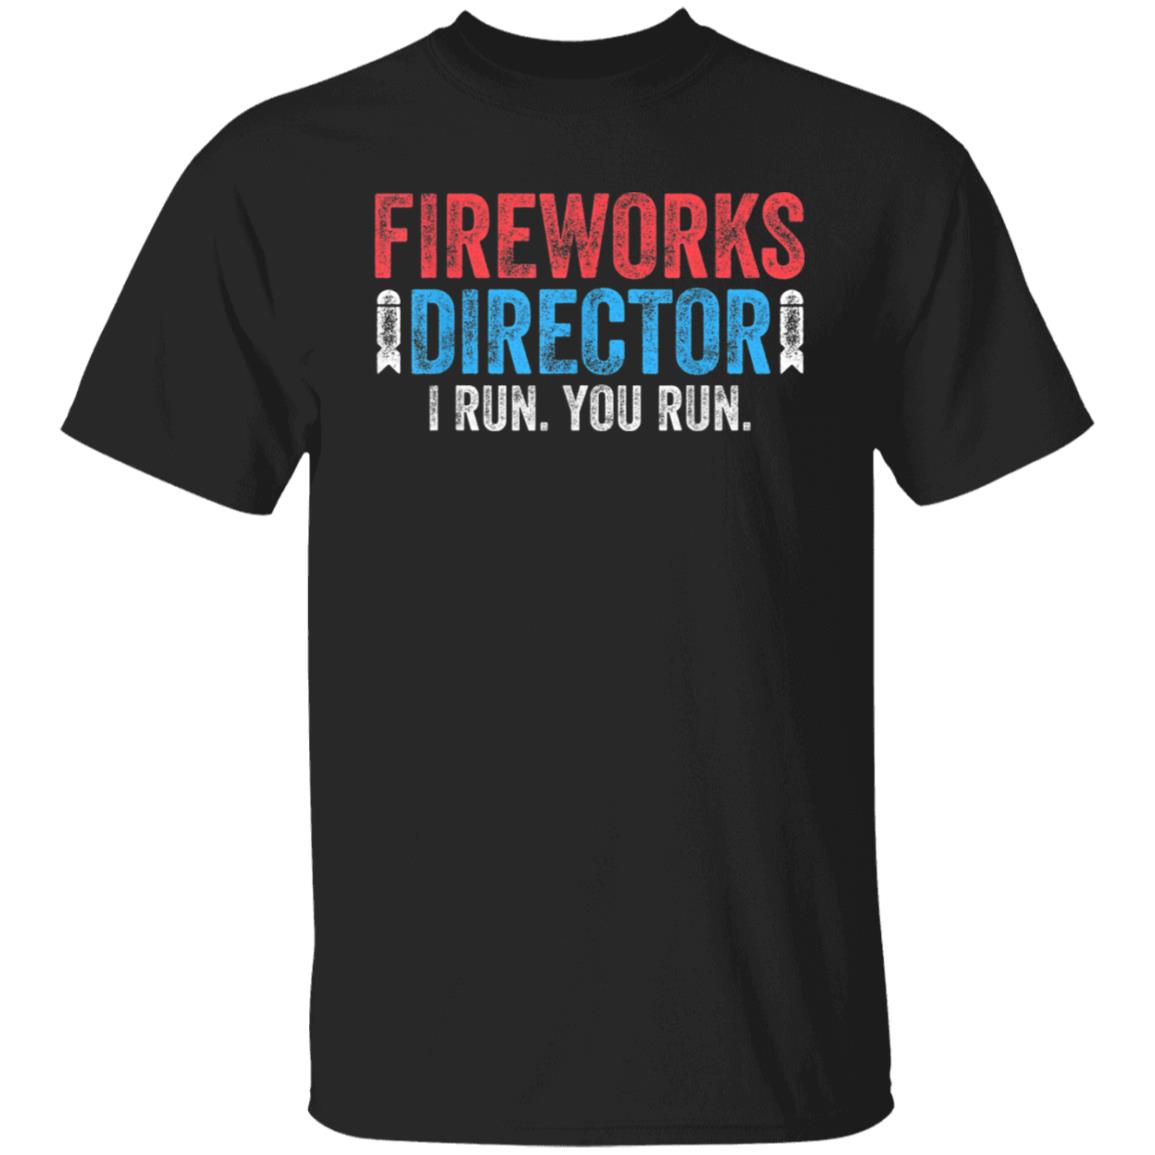 Fireworks Director T-Shirt 4th of July Gift Black Shirt T-Shirt